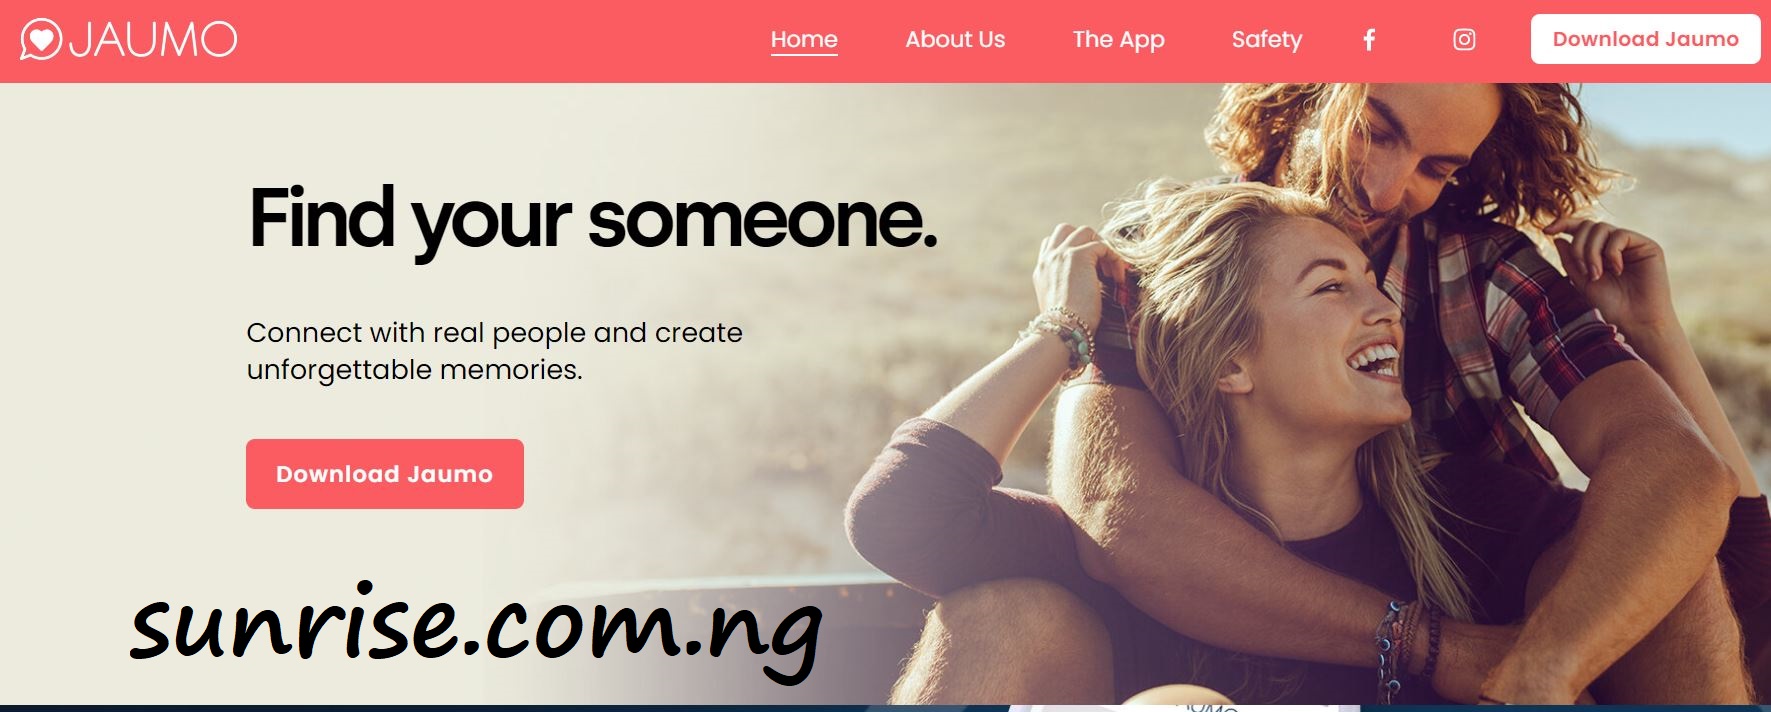 jaumo-dating-app-sign-up